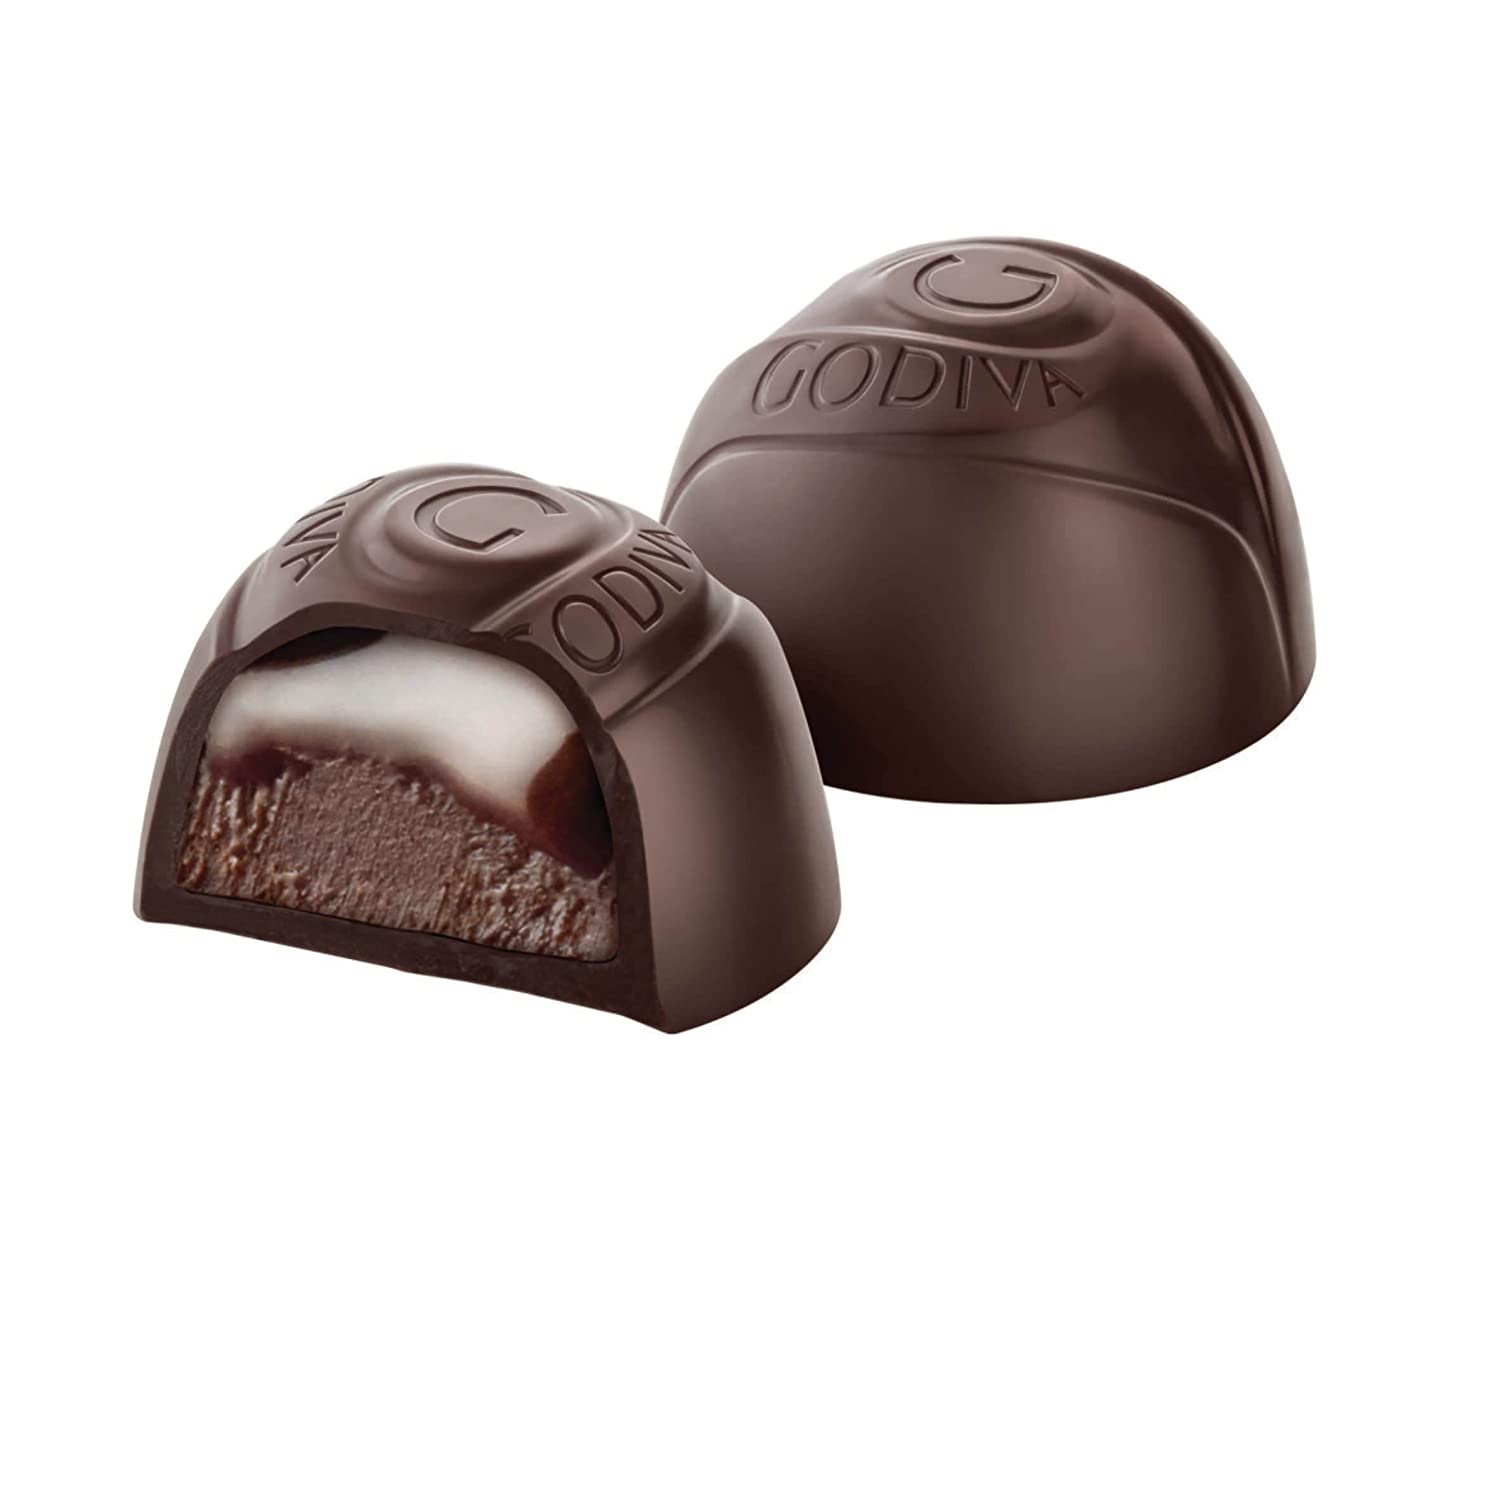 Chocolate GODIVA ngon nhất thế giới Truffles : Túi 19 cái 204g vị Wrapped Assorted Chocolate